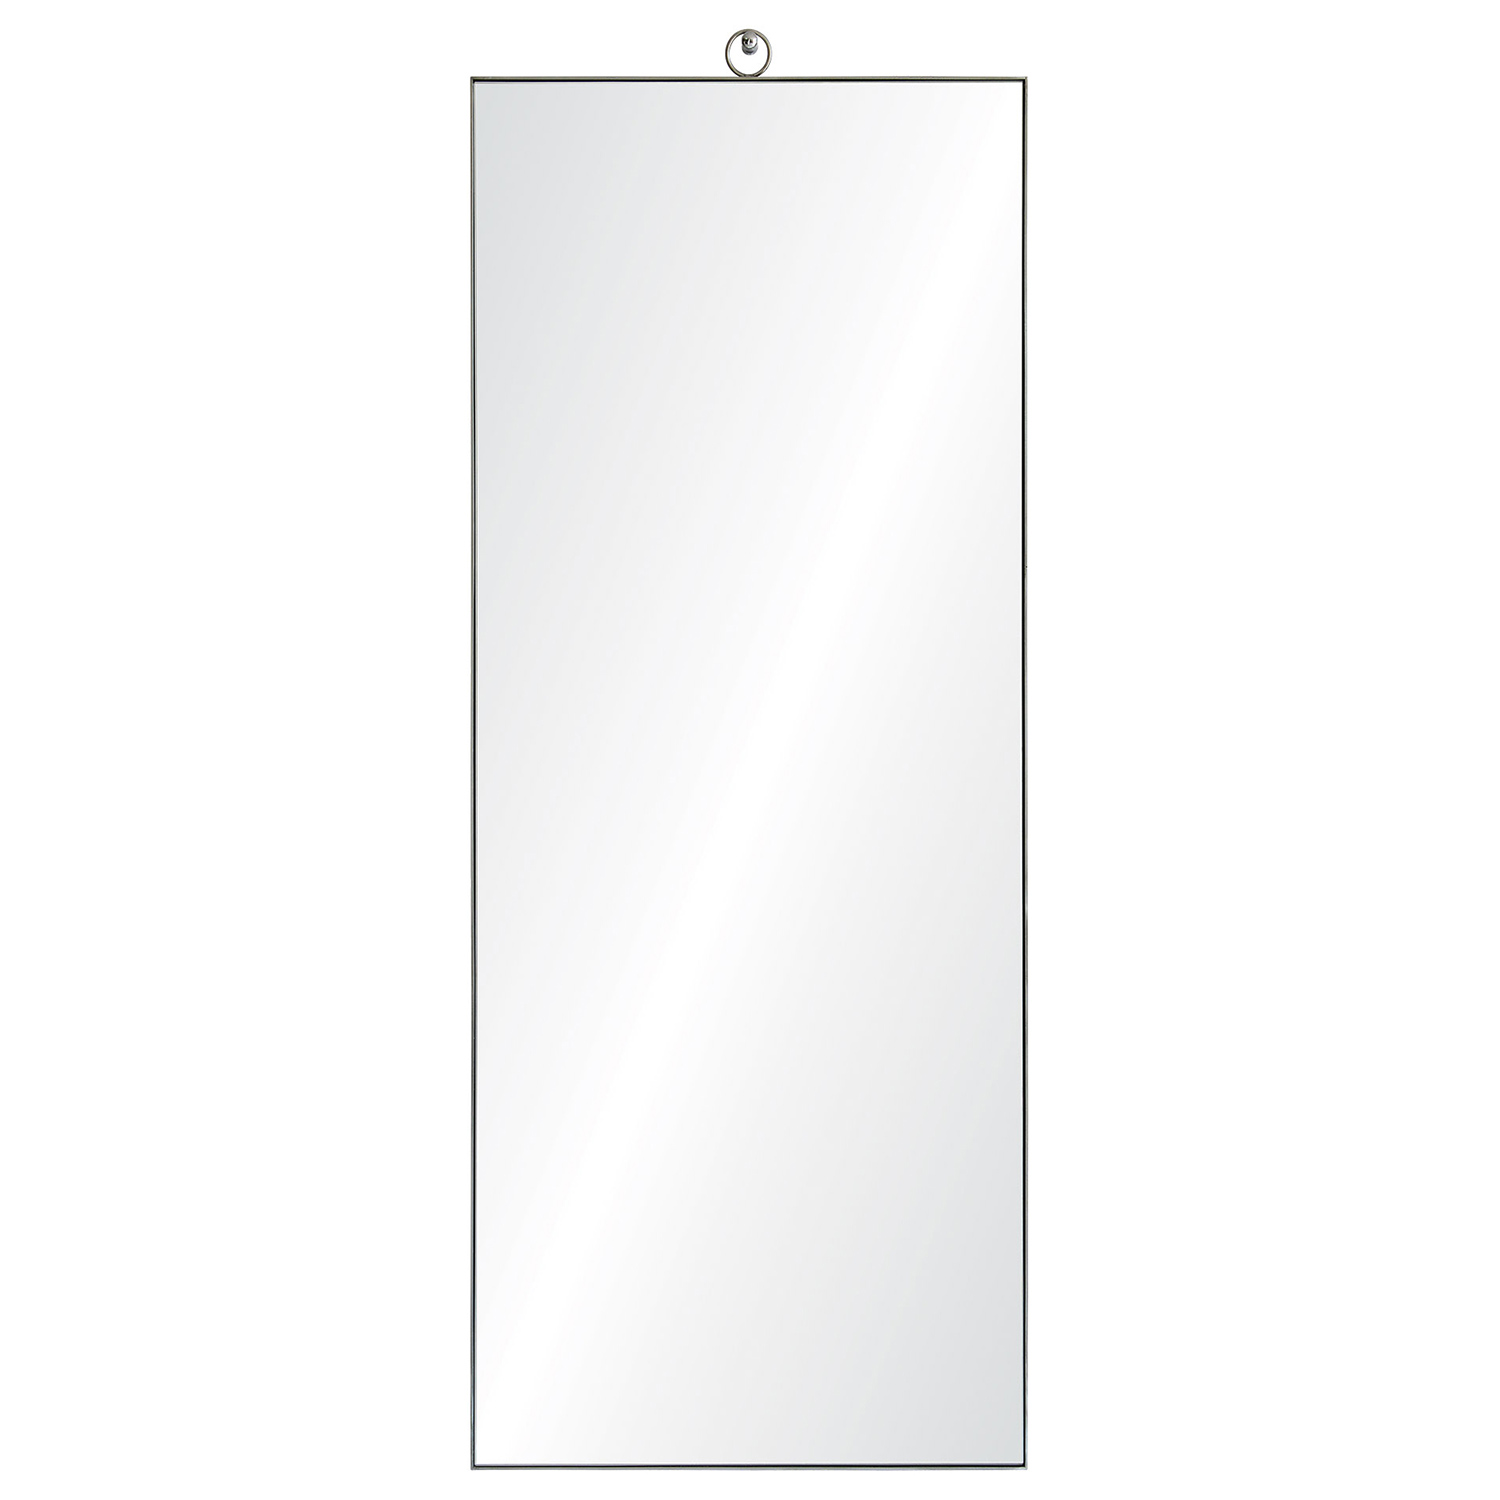 Ren-Wil Filbert Rectangular Mirror - Stainless Steel